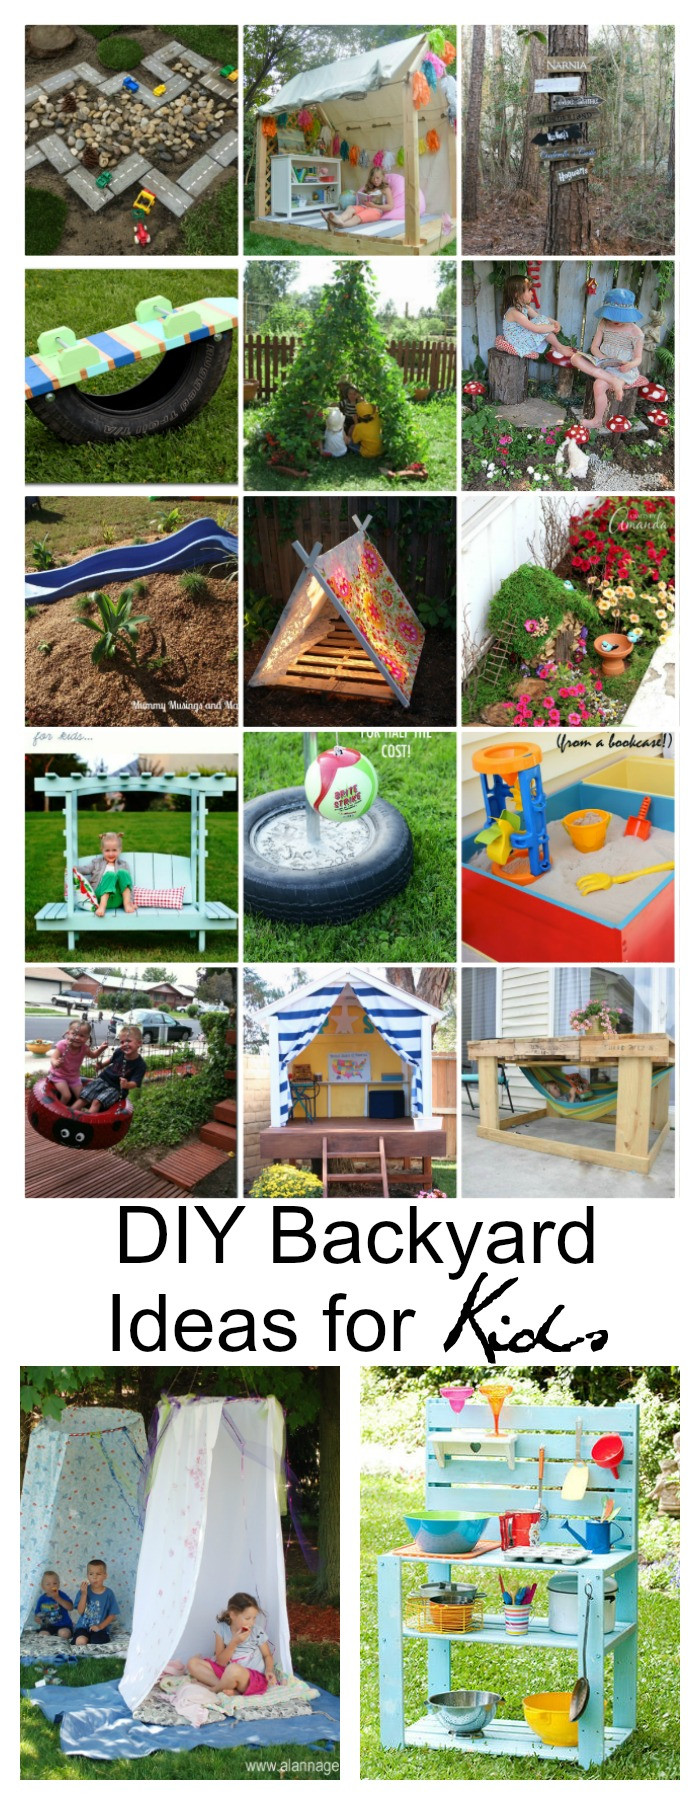 Best ideas about DIY Backyard Ideas For Kids
. Save or Pin DIY Backyard Ideas for Kids The Idea Room Now.